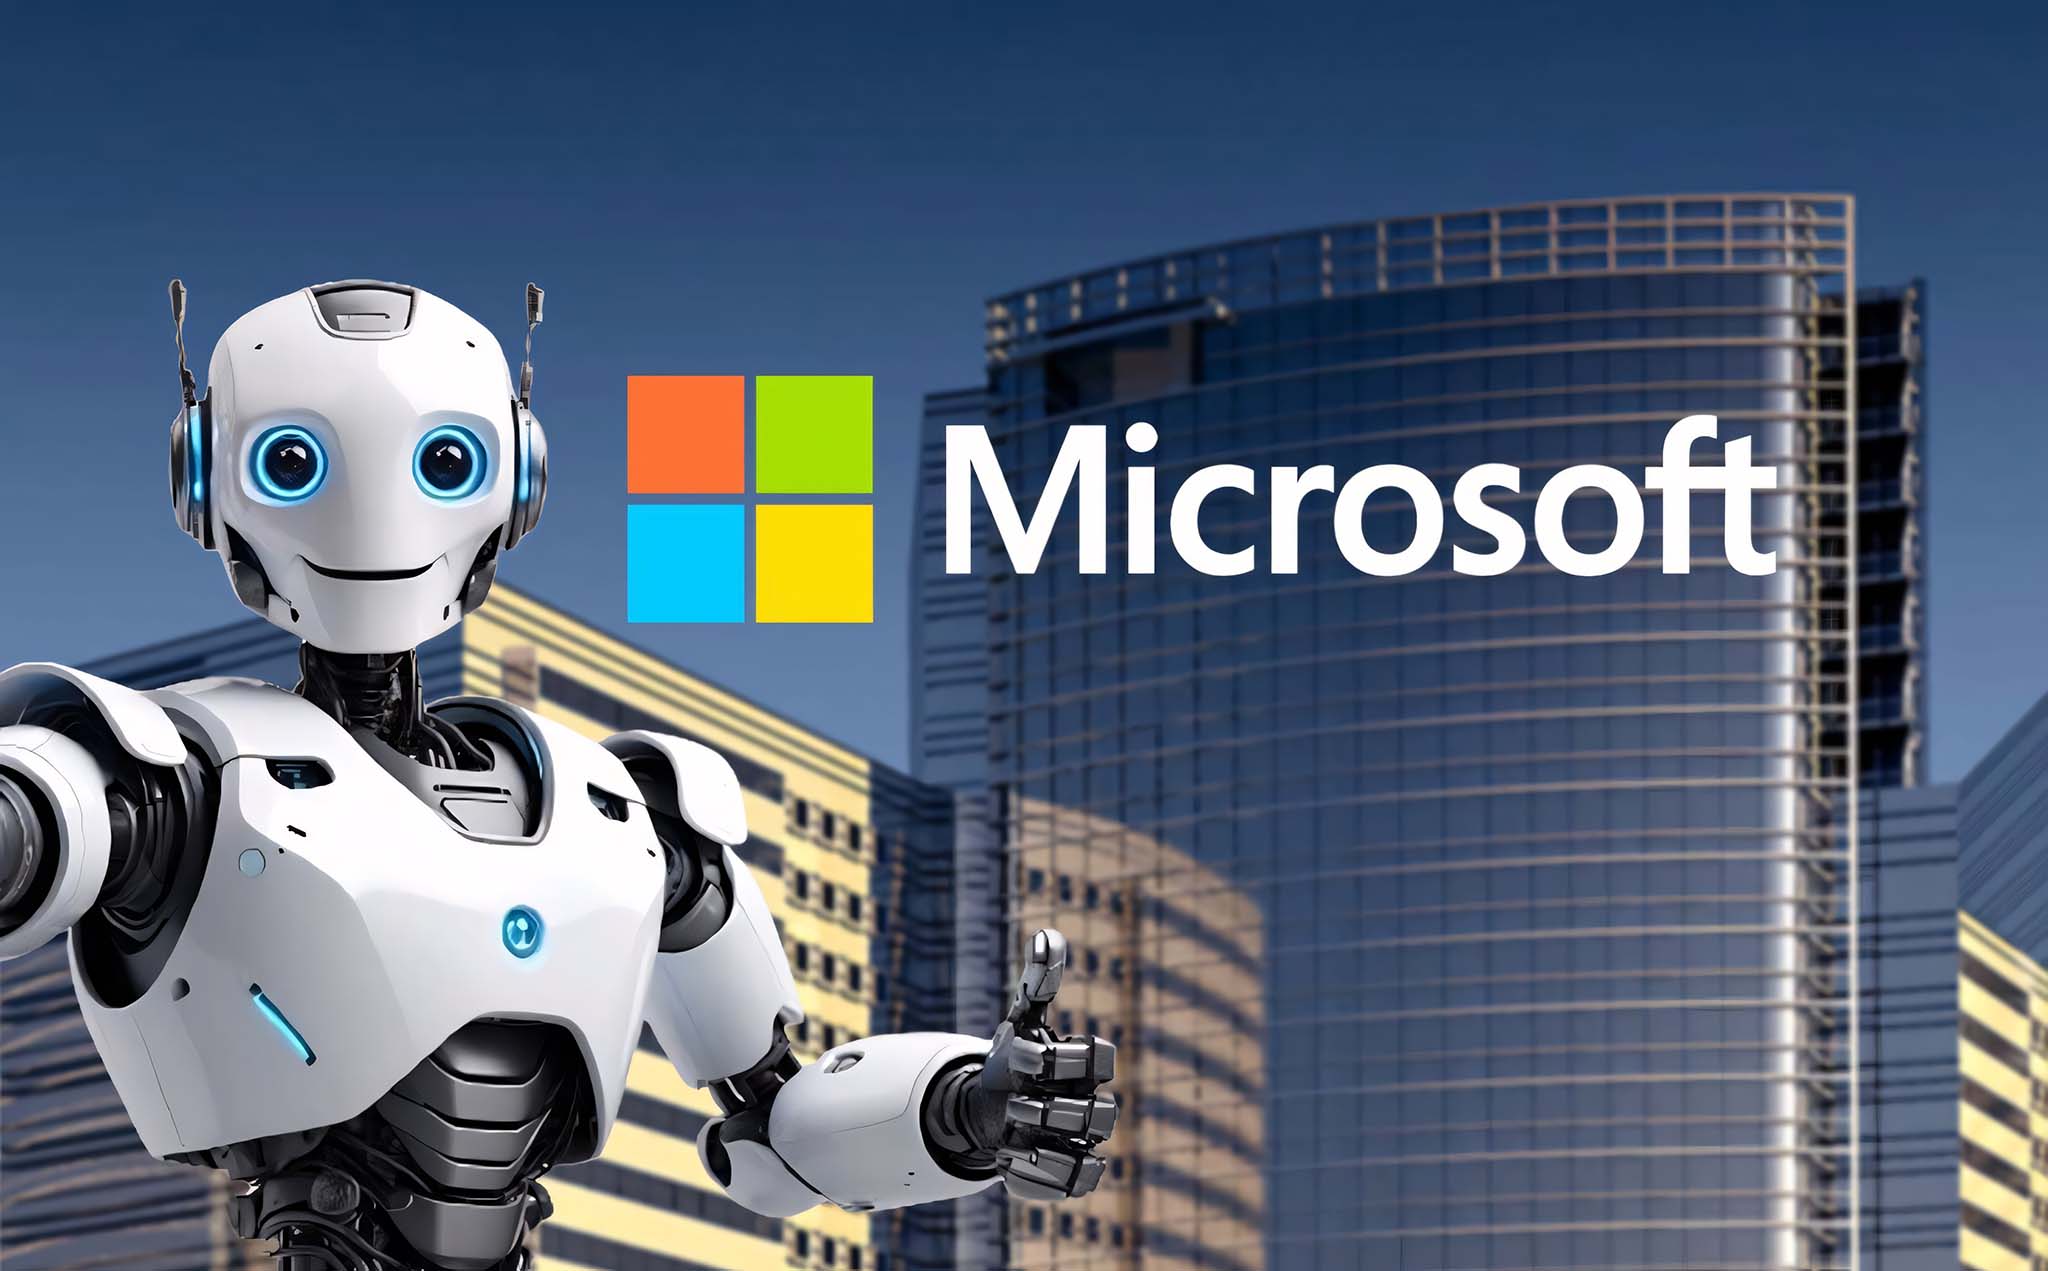 Microsoft のロゴが付いた街の前に立つロボット